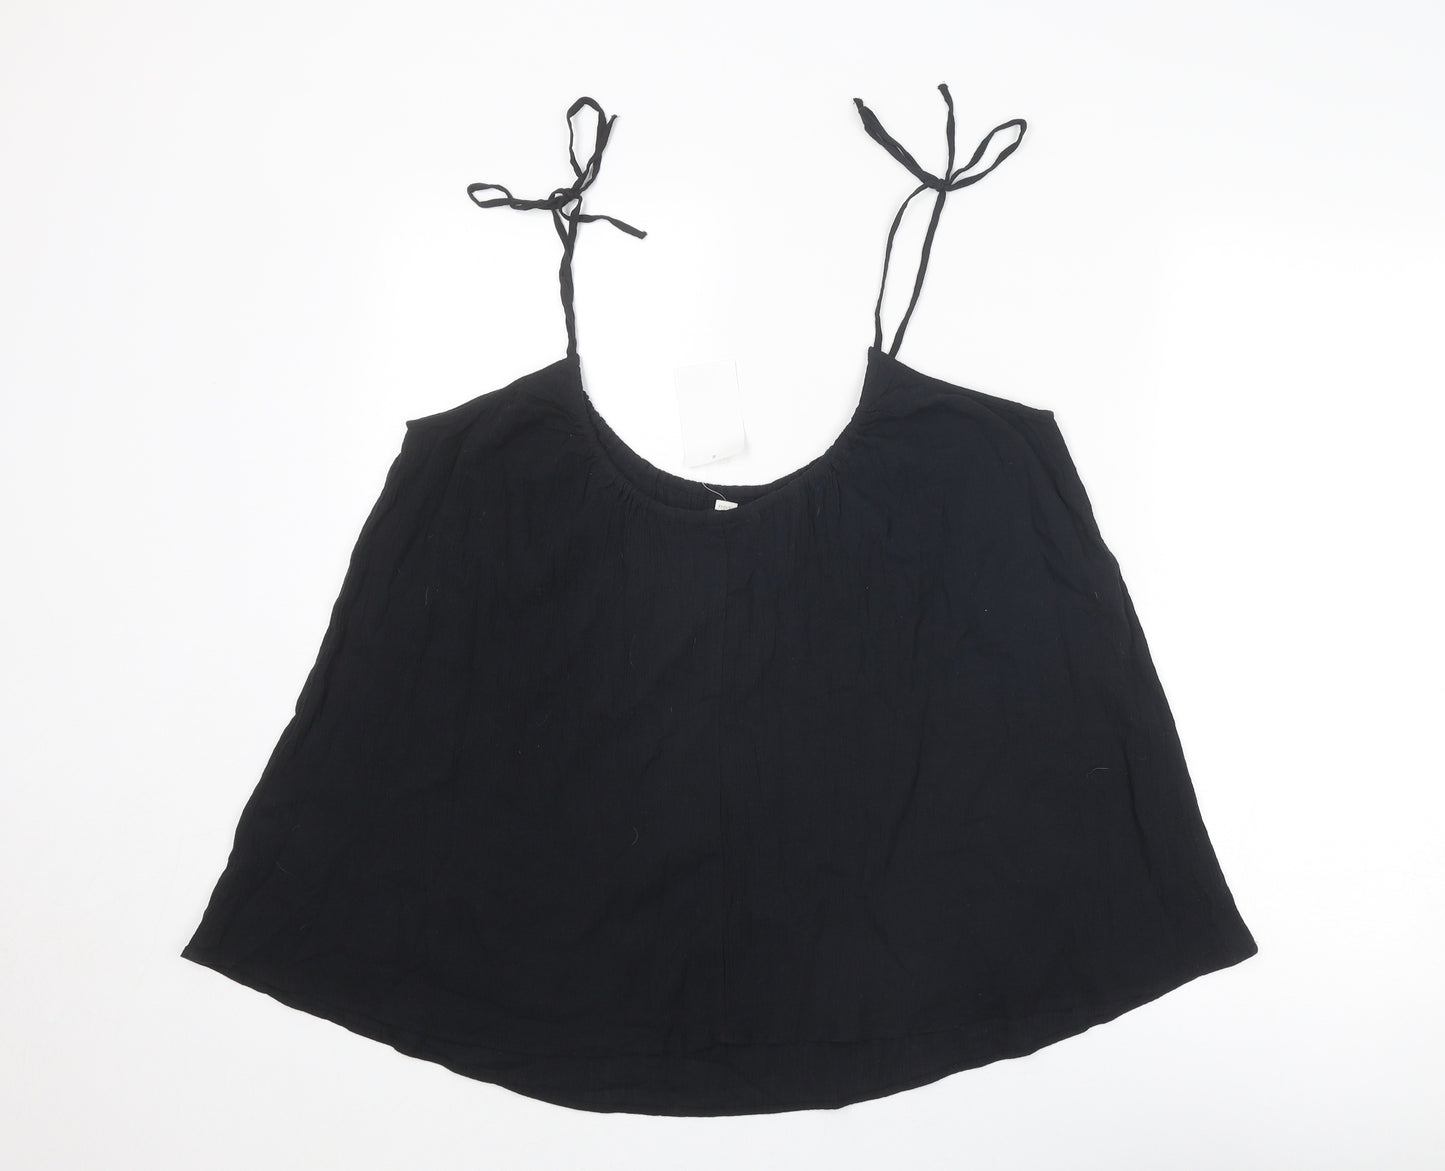 H&M Womens Black Cotton Camisole Tank Size S Scoop Neck - Tie Strap Detail